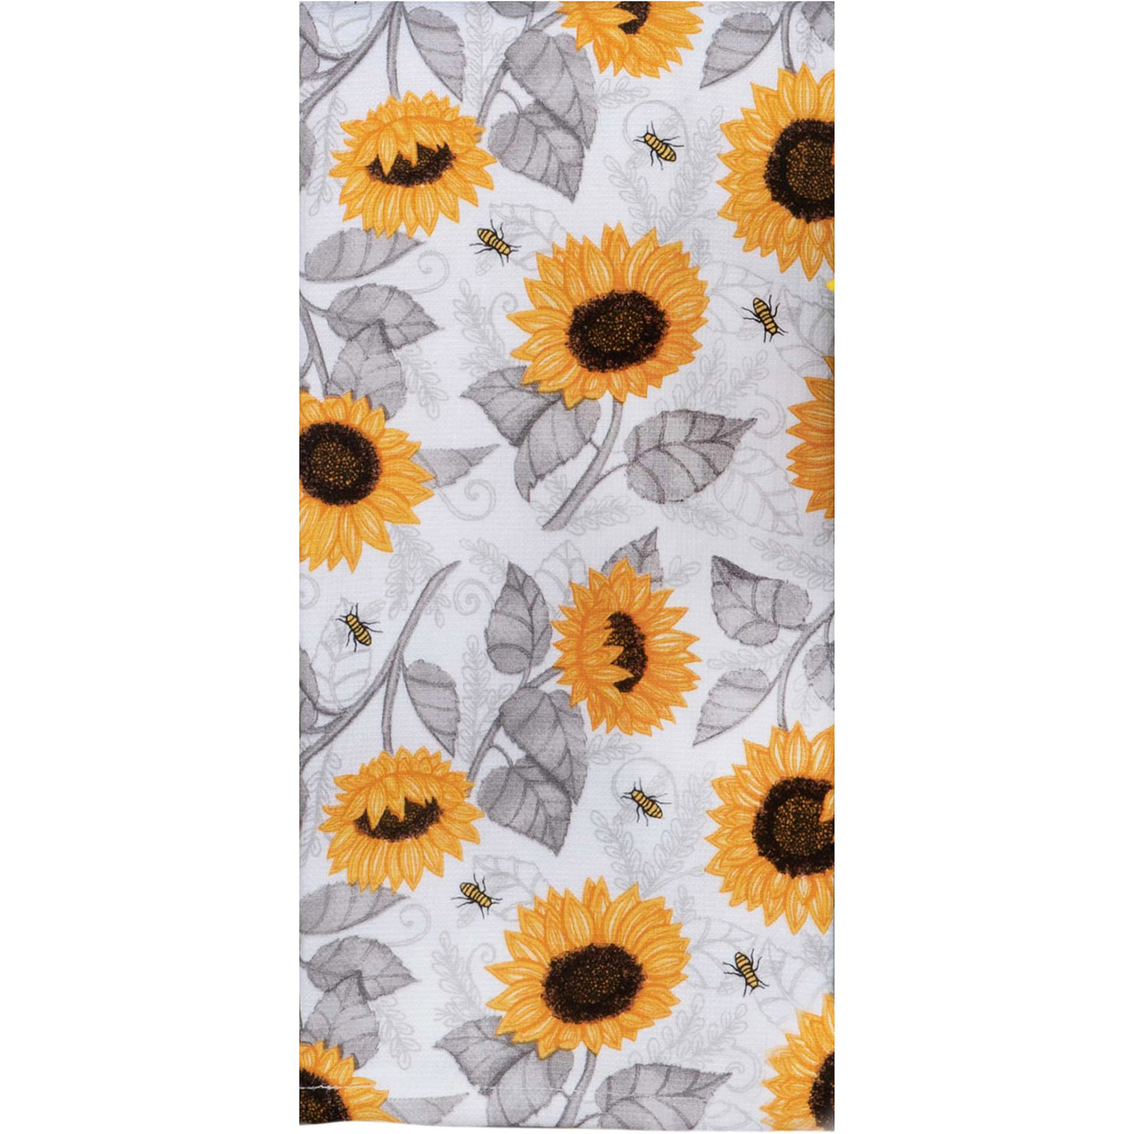 Just Bees Sunflower Toss Kay Dee Designs Dual Purpose Towel 